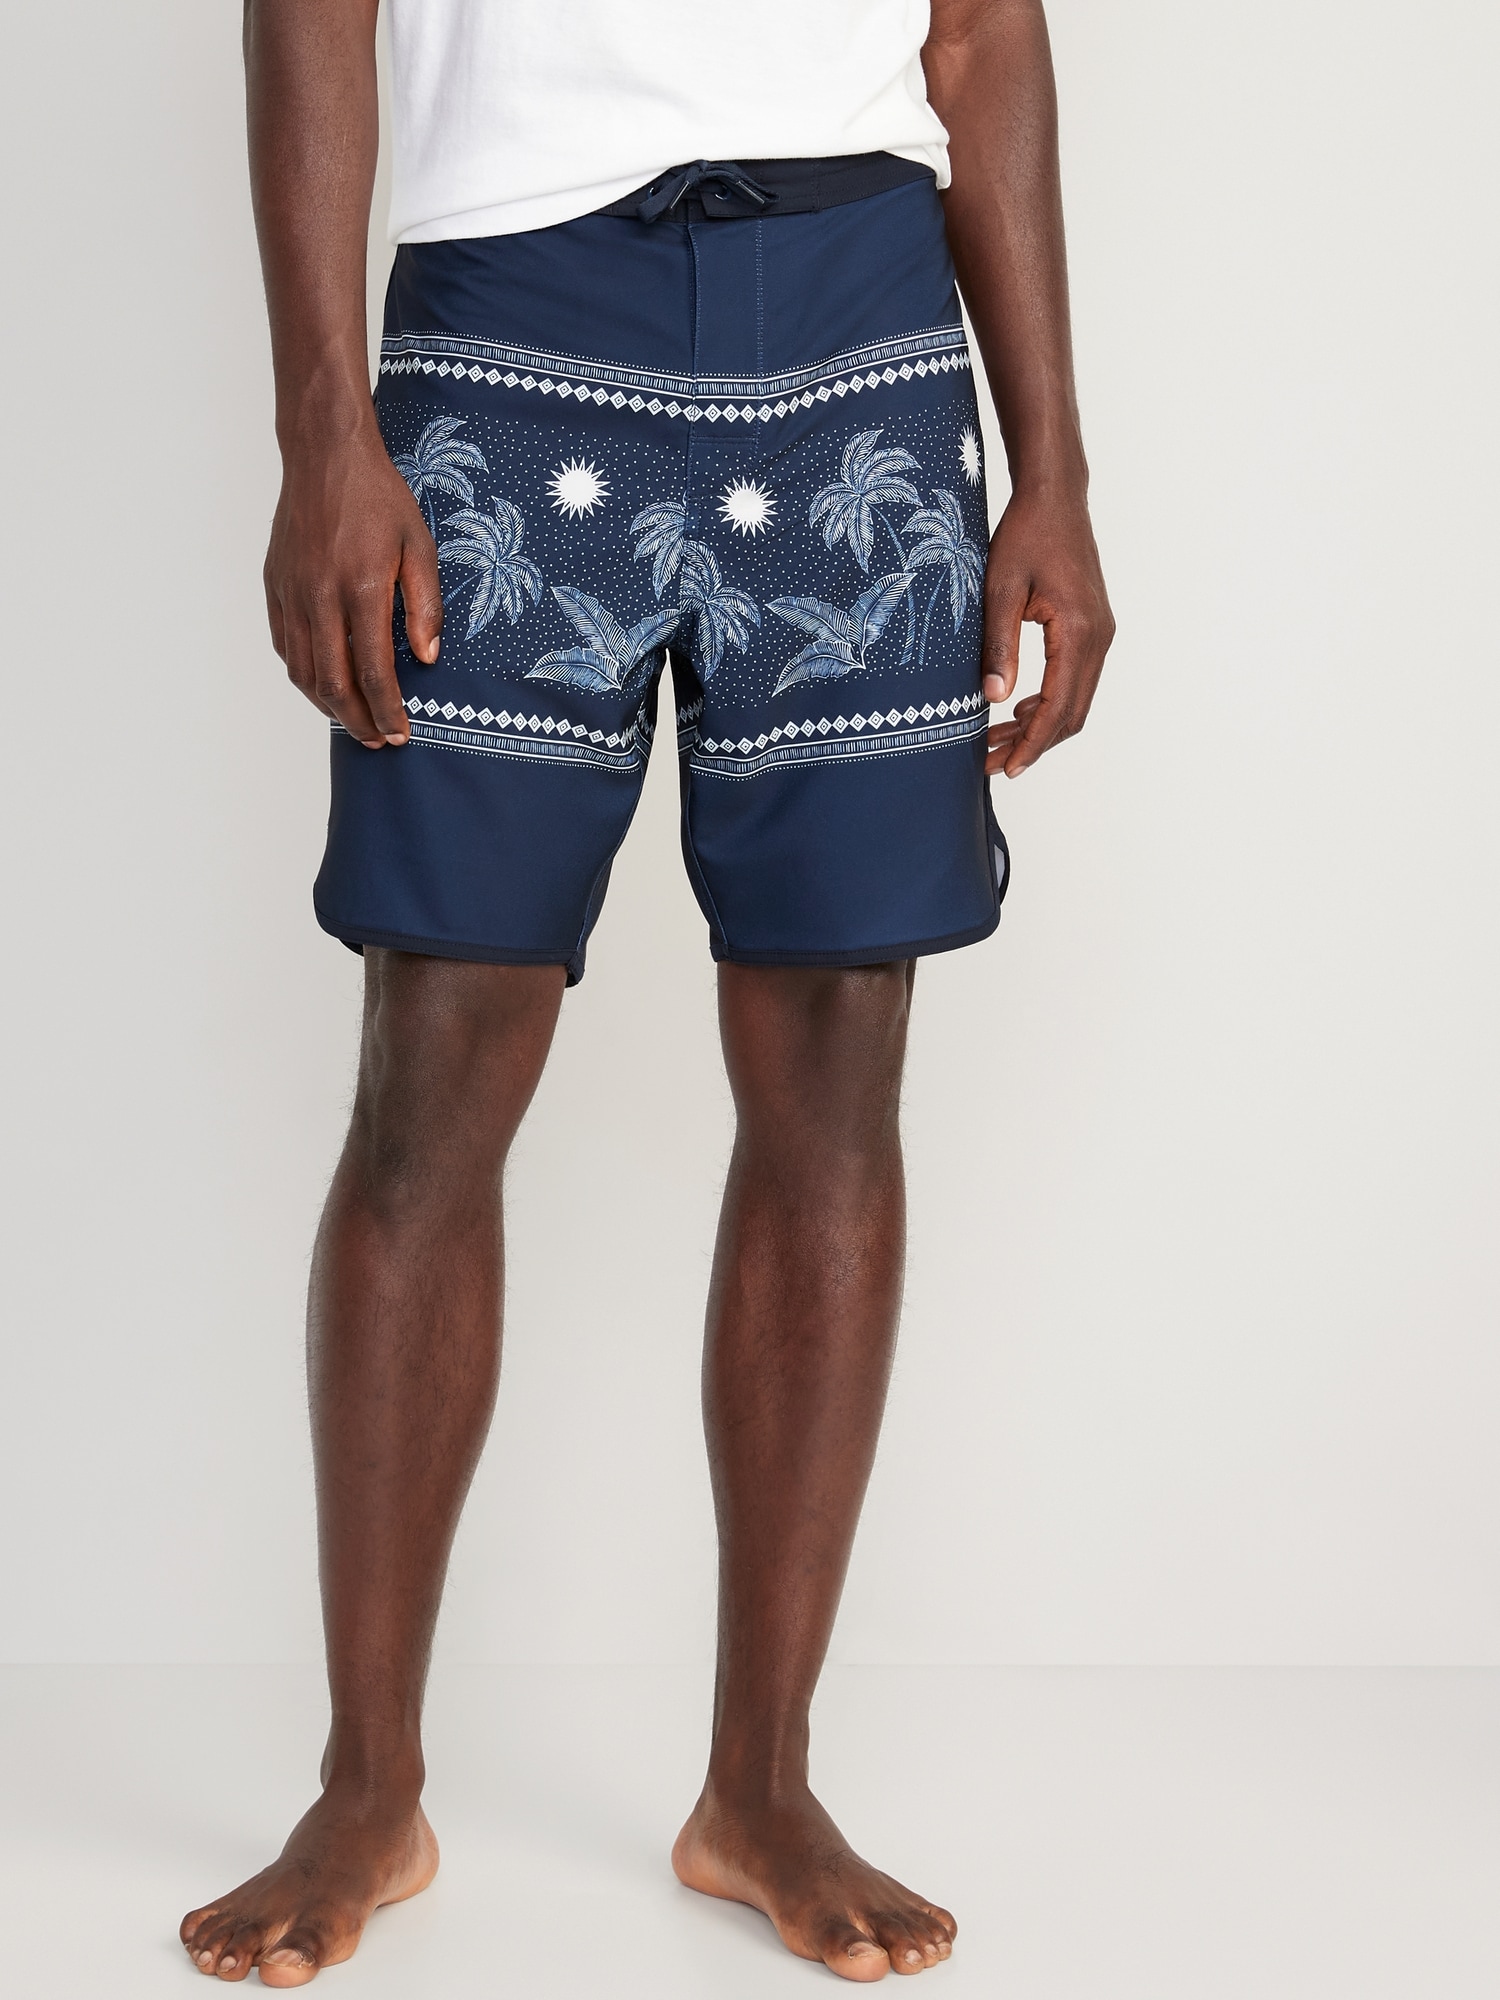 Printed Built-In Flex Board Shorts -- 8-inch inseam